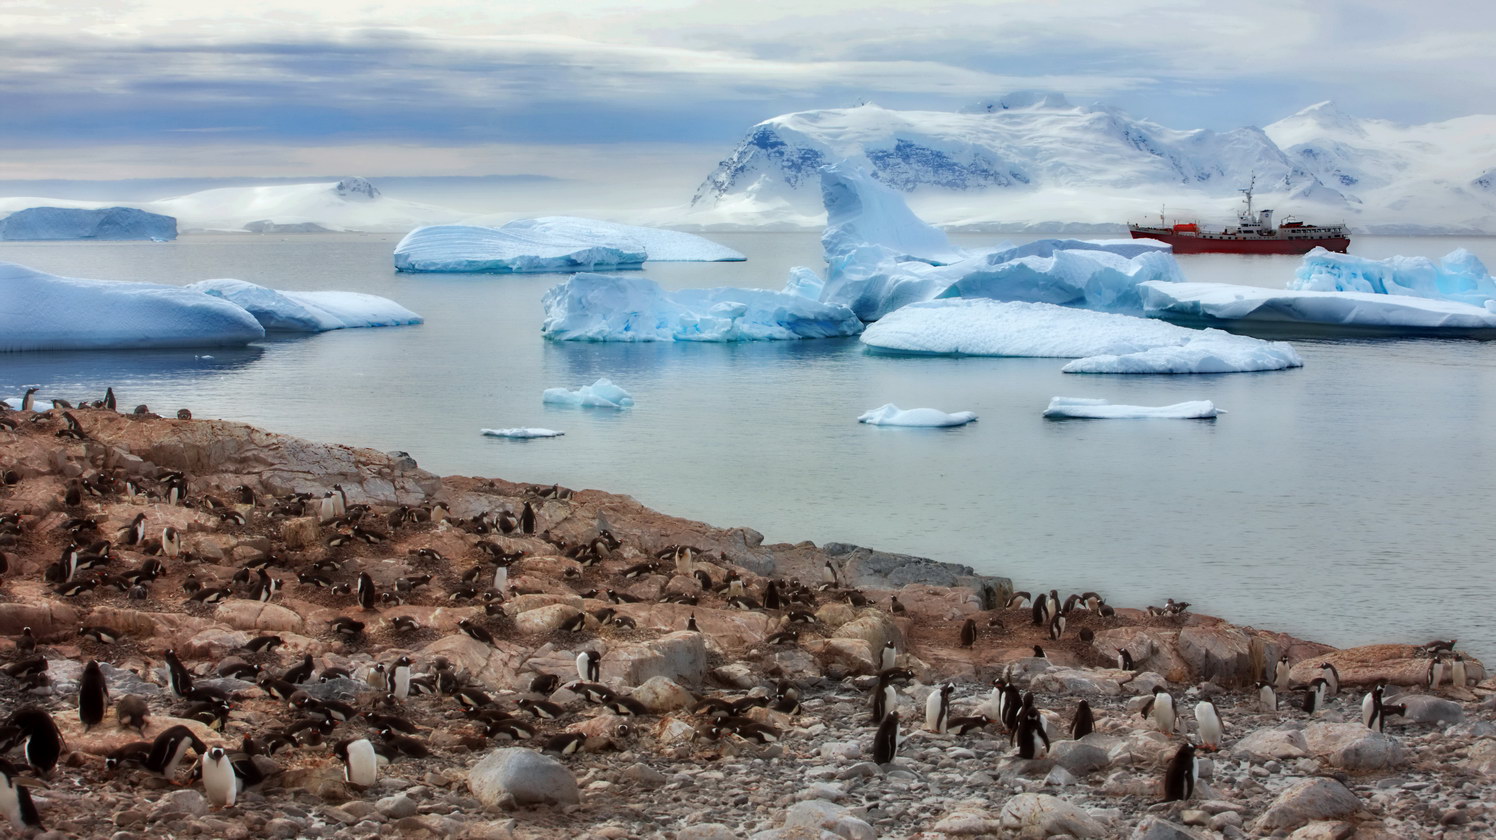 Antarctic, penguins | landscape, outdoor, nature, Antarctic, penguins, water, ice, sky, ship, clouds